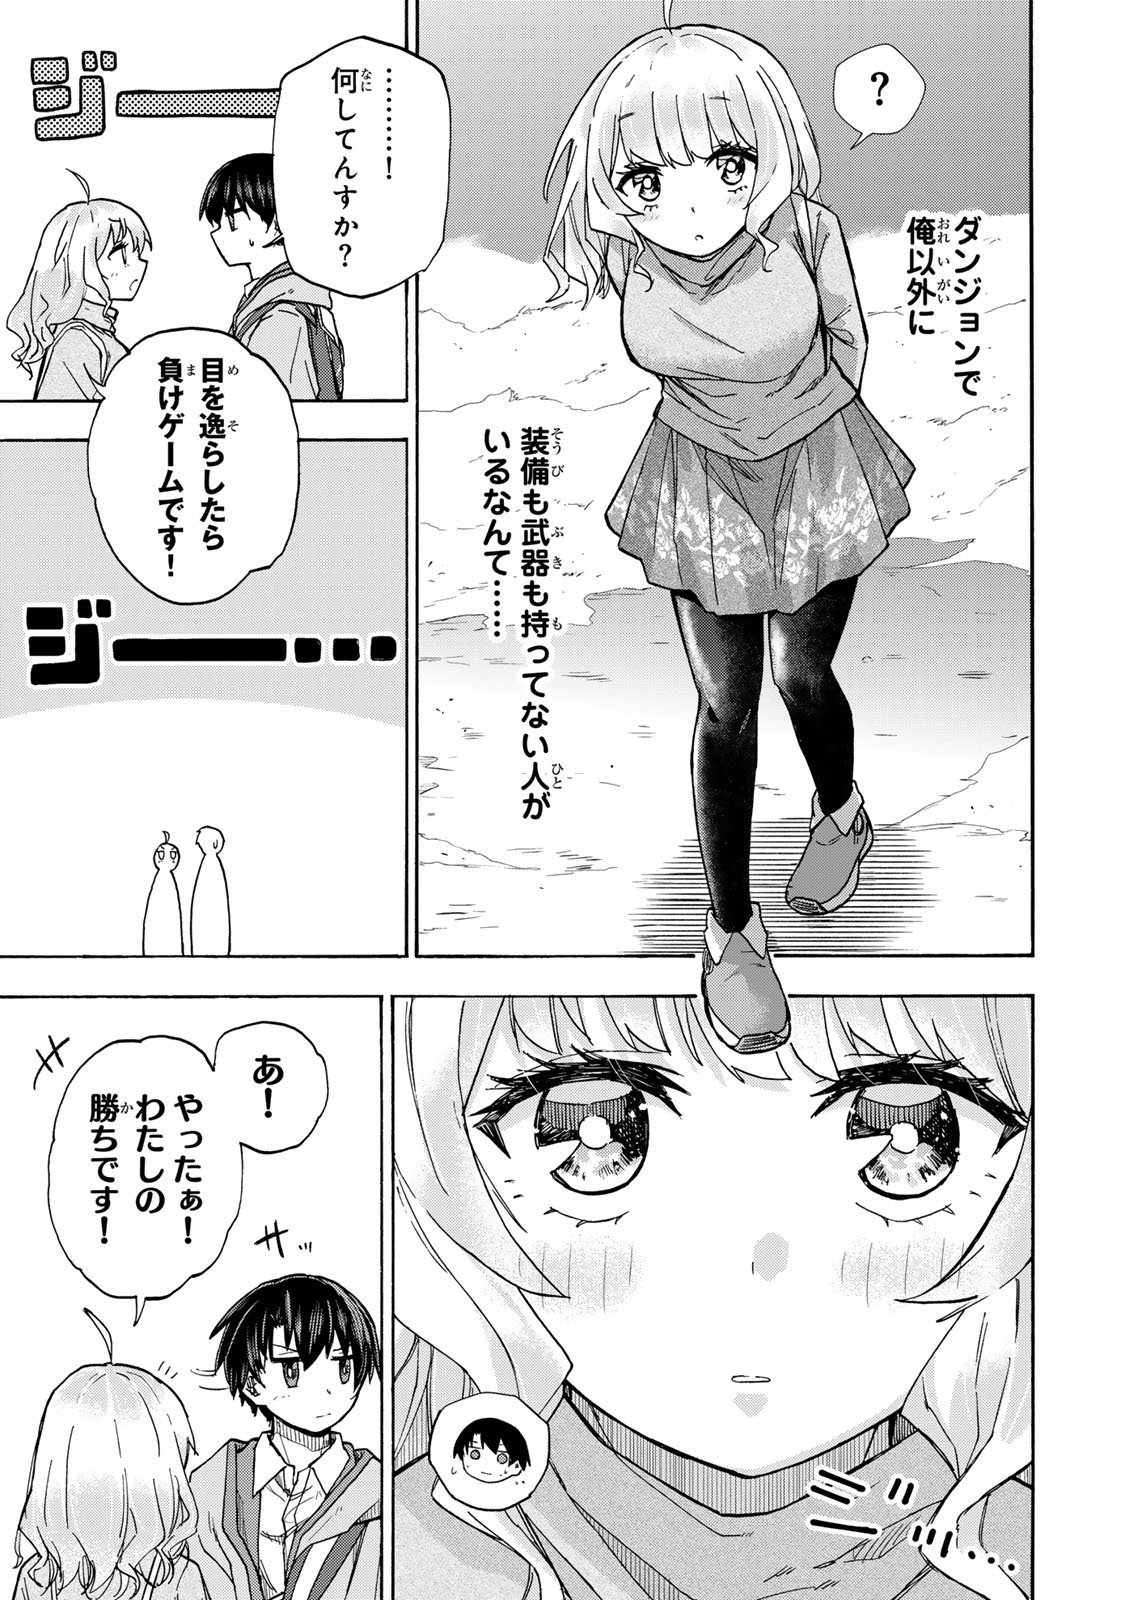 Saikyou de Saisoku no Mugen Level Up - Chapter 12 - Page 10 - Raw Manga 生漫画